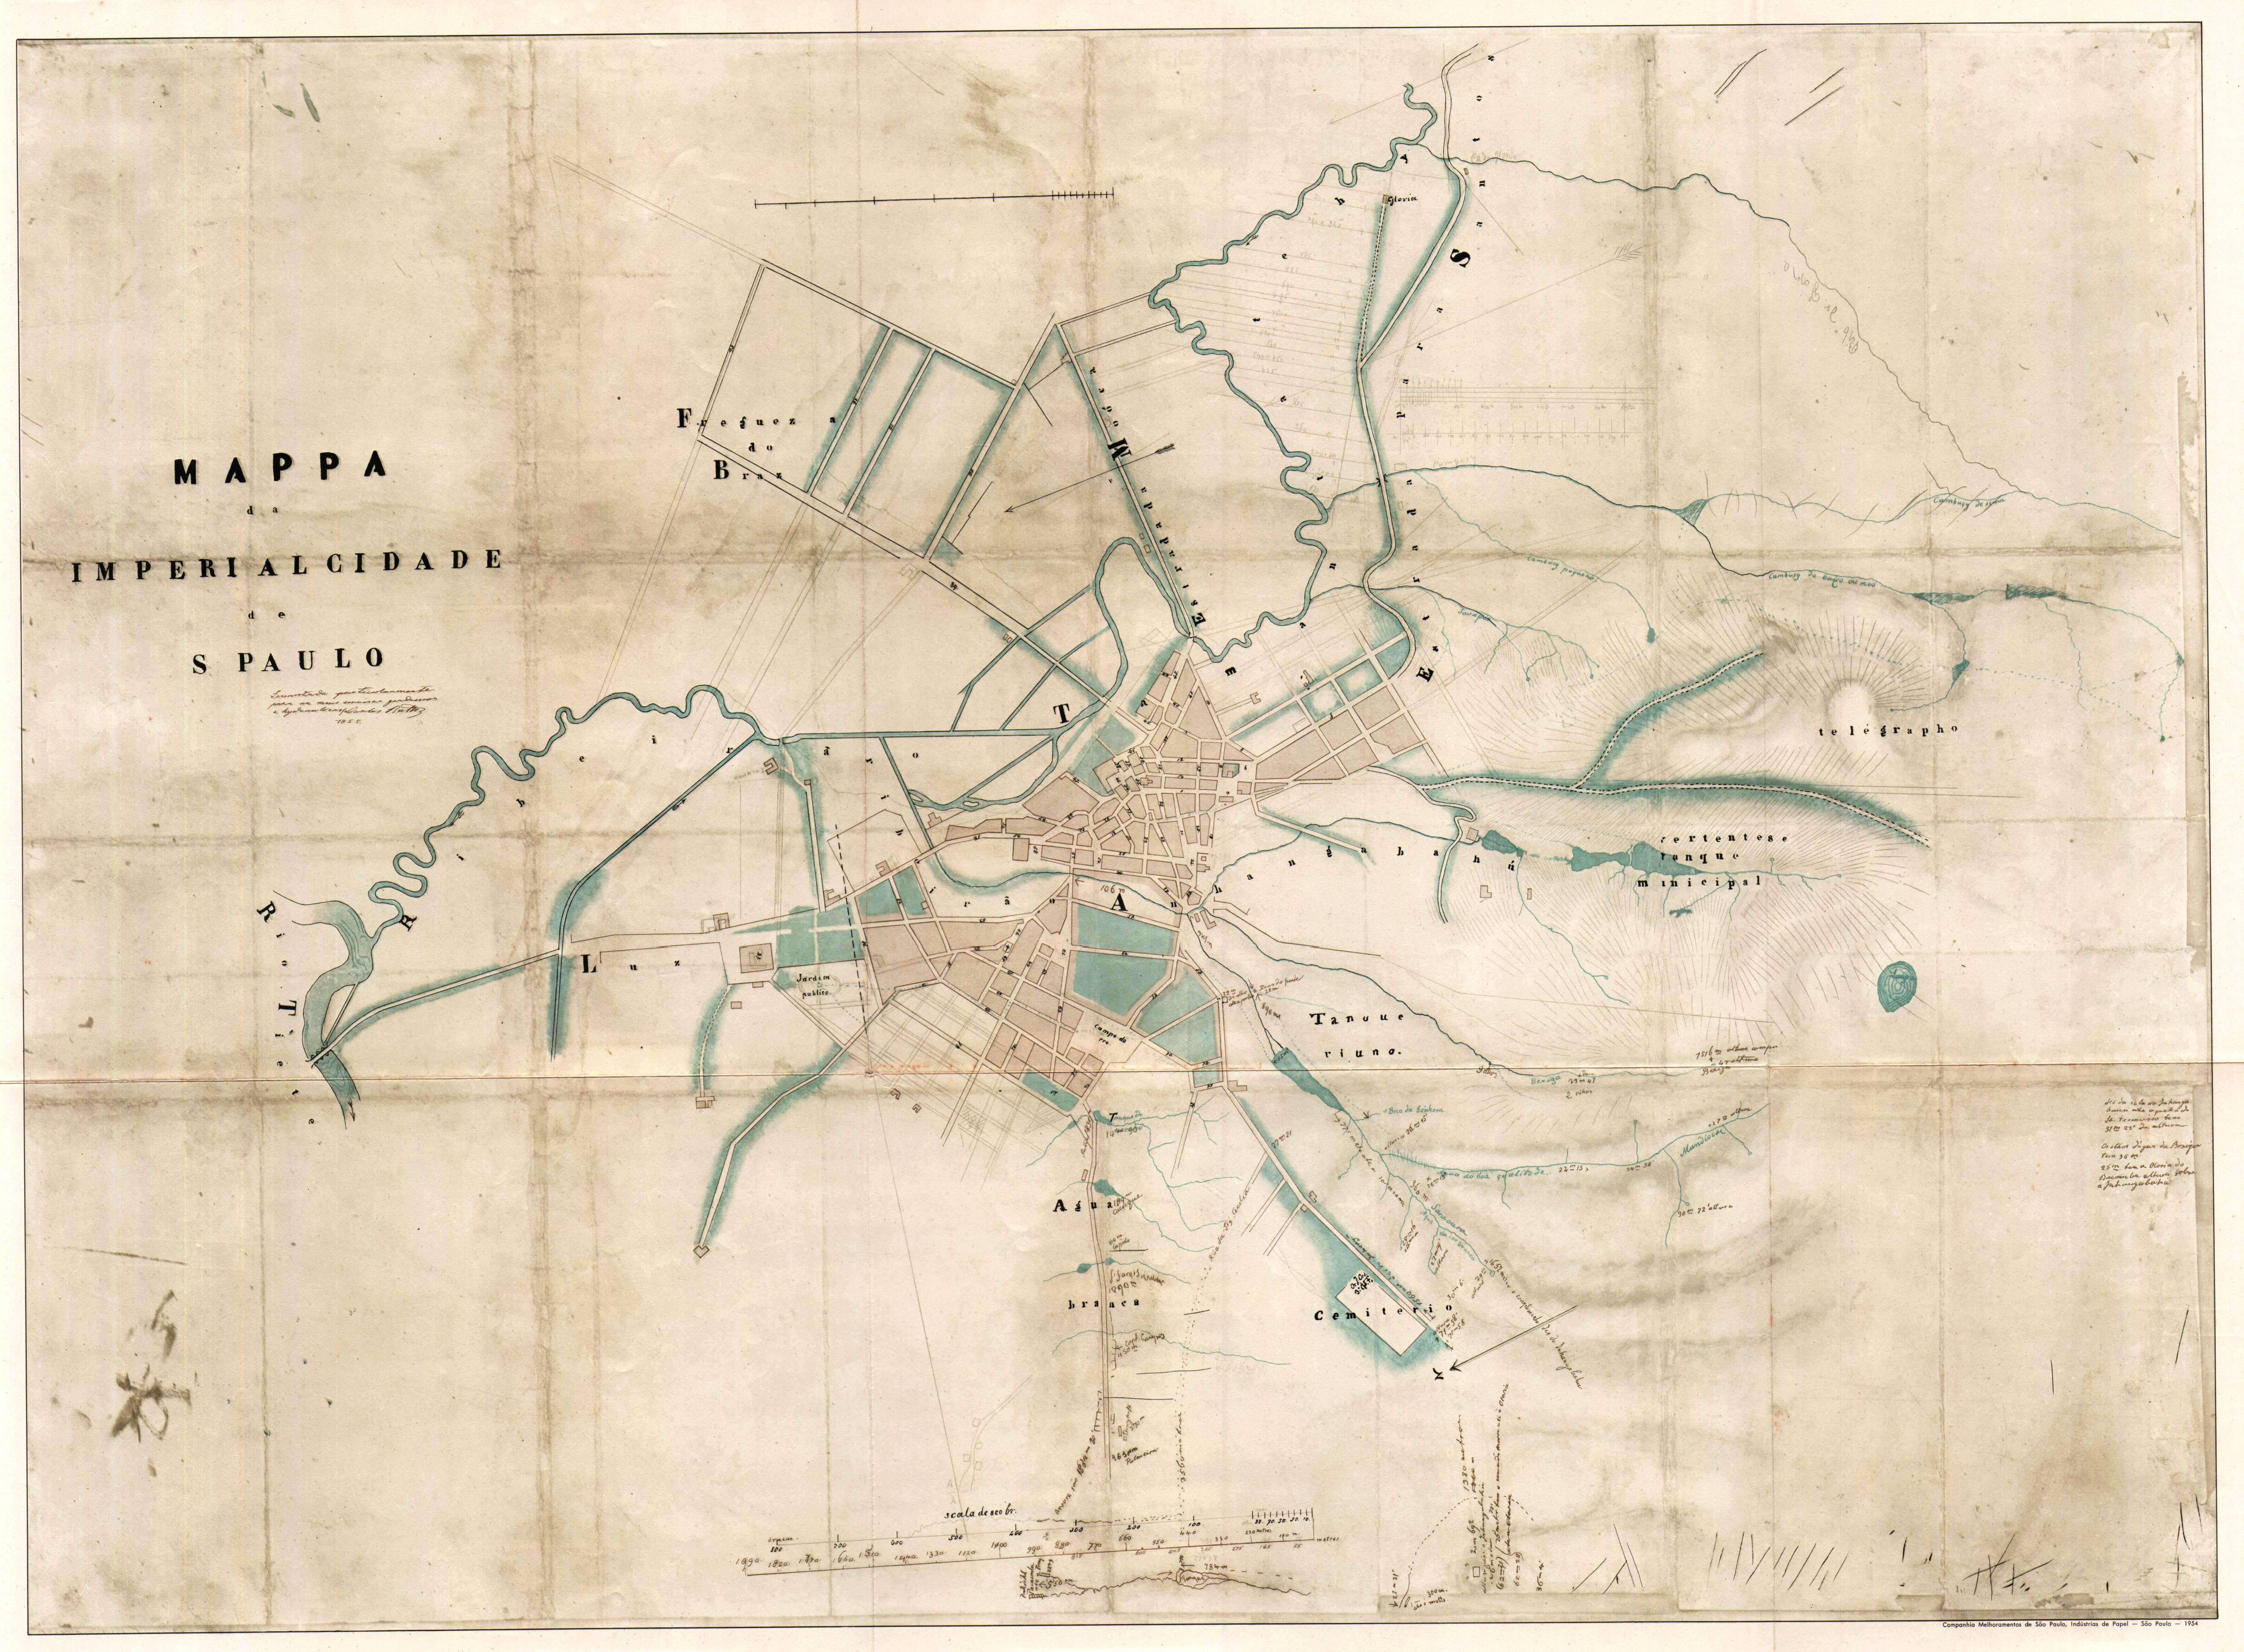 MAPPA DA IMPERIAL CIDADE DE SO PAULO,1855